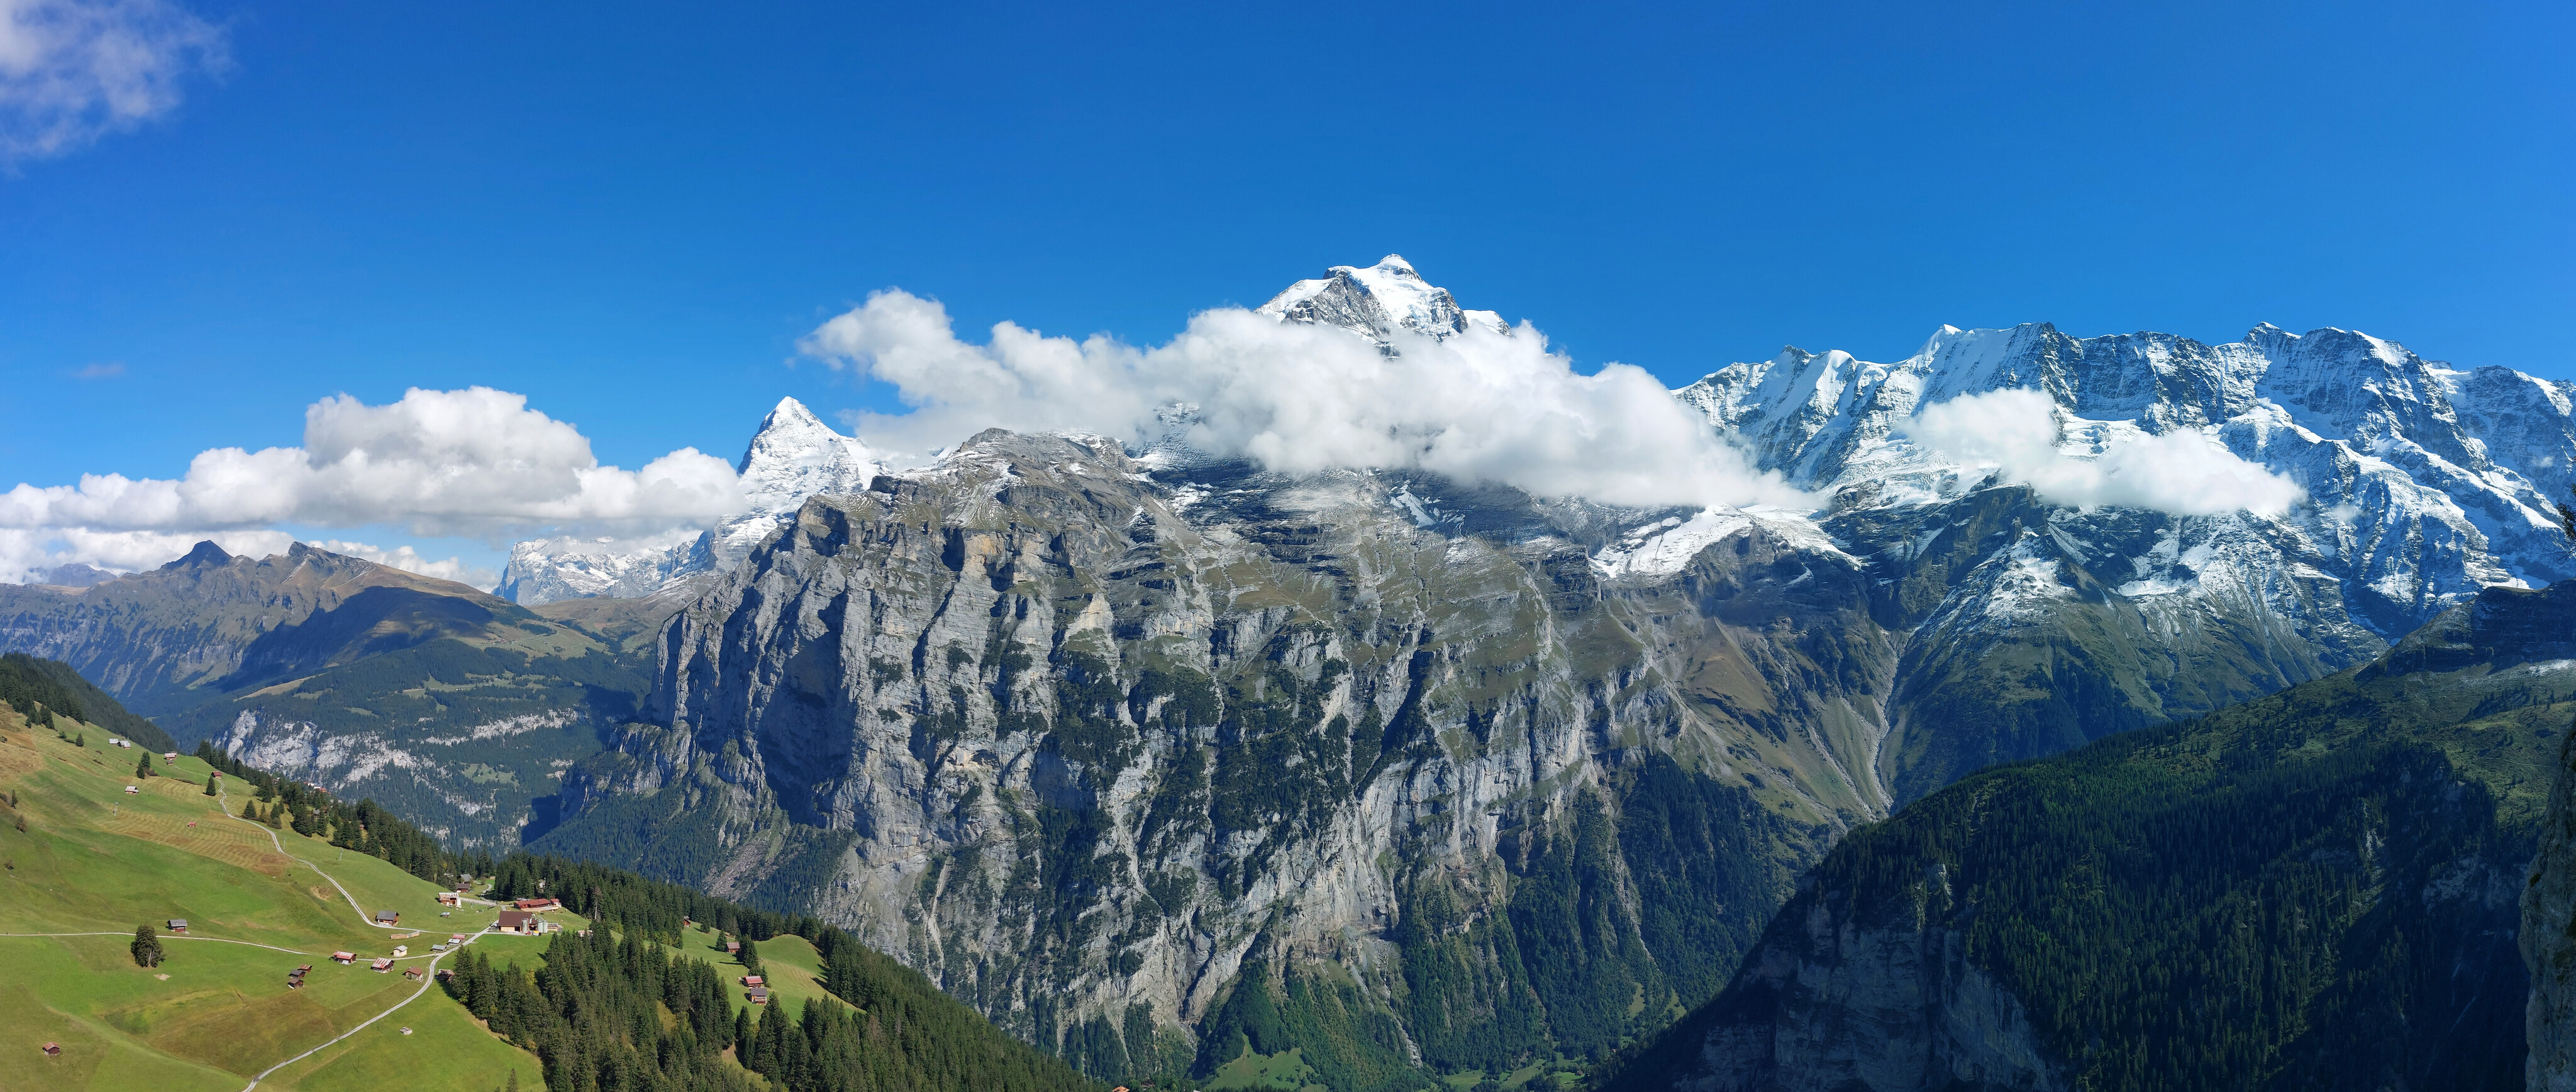 Jungfrau and Eiger